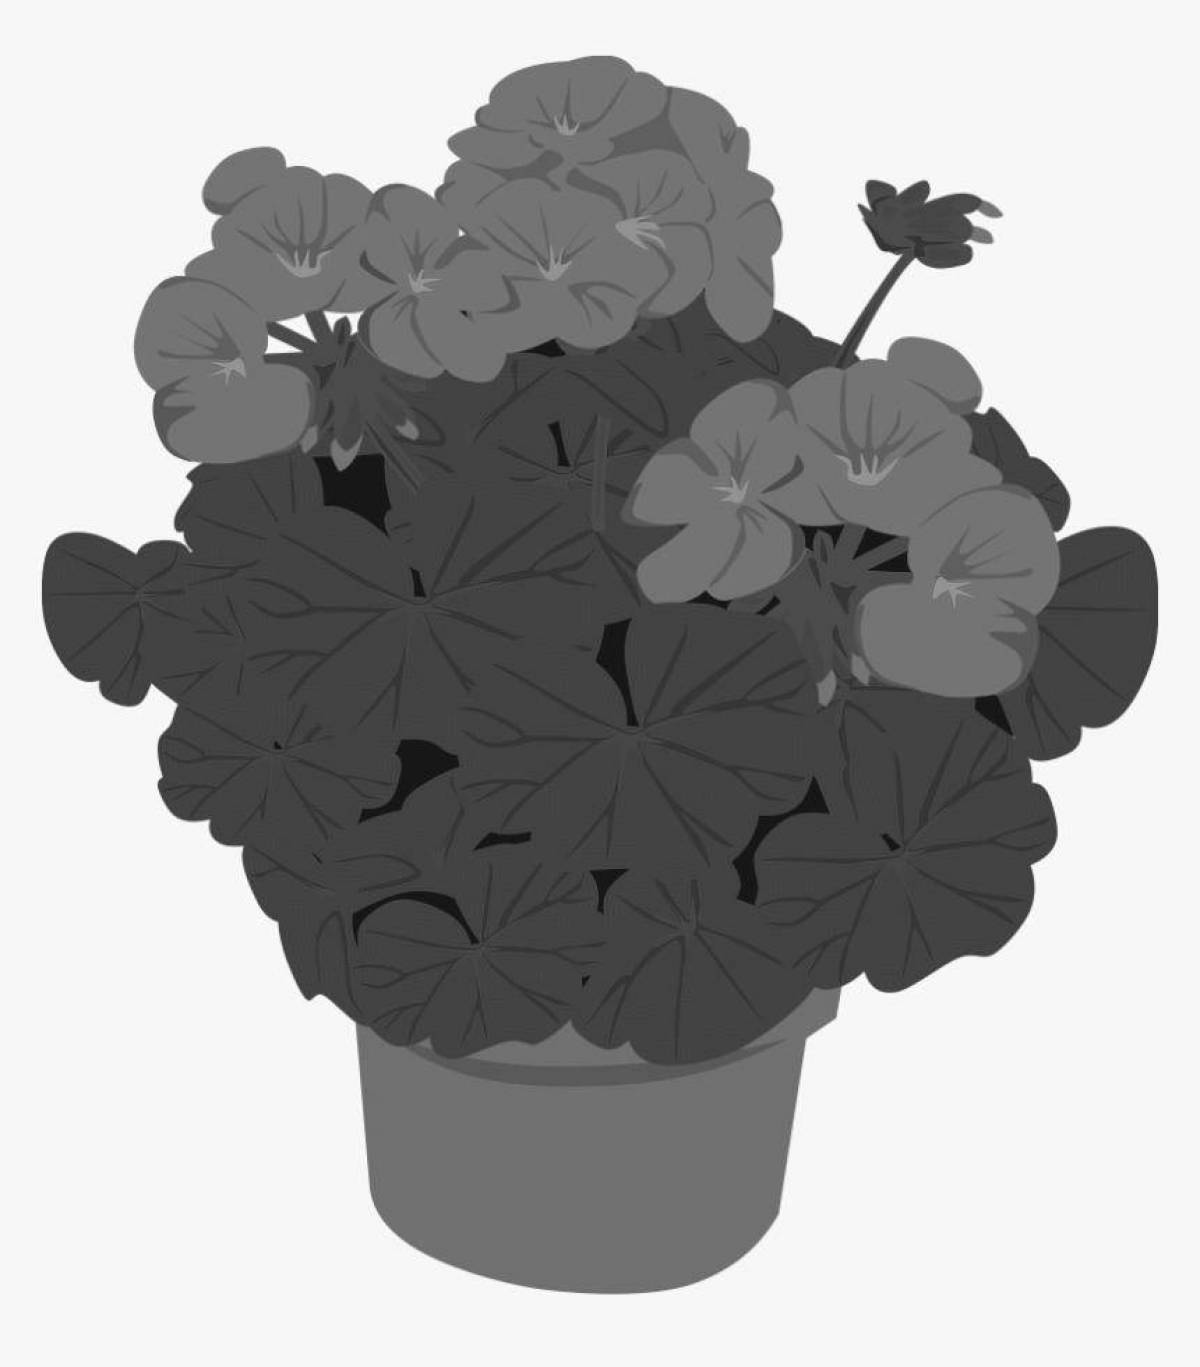 Humorous geranium in baby pot